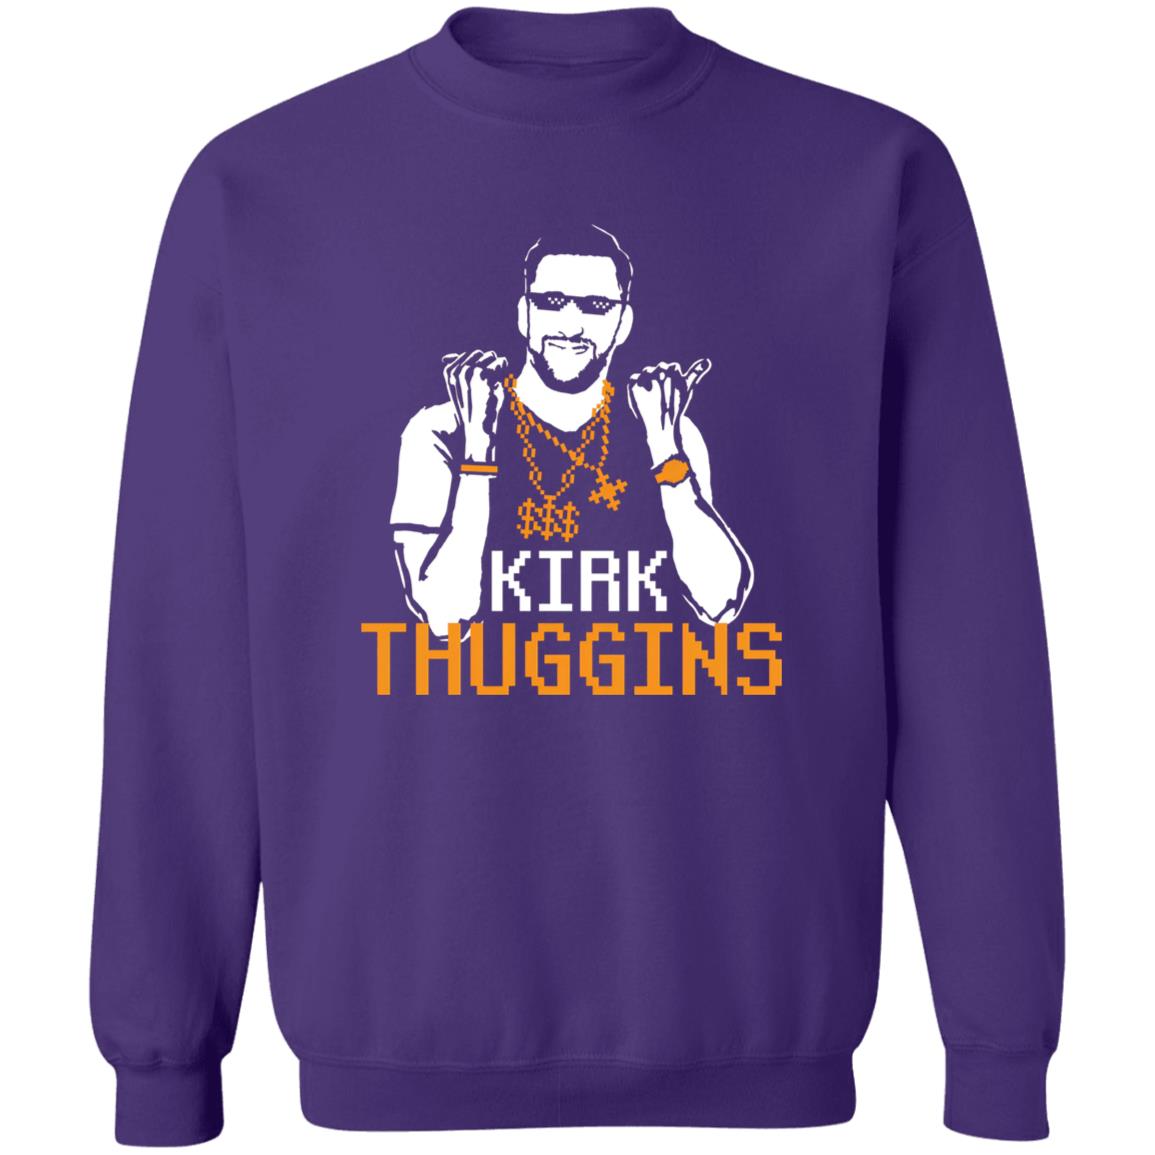 Kirk Thuggins Sweatshirt